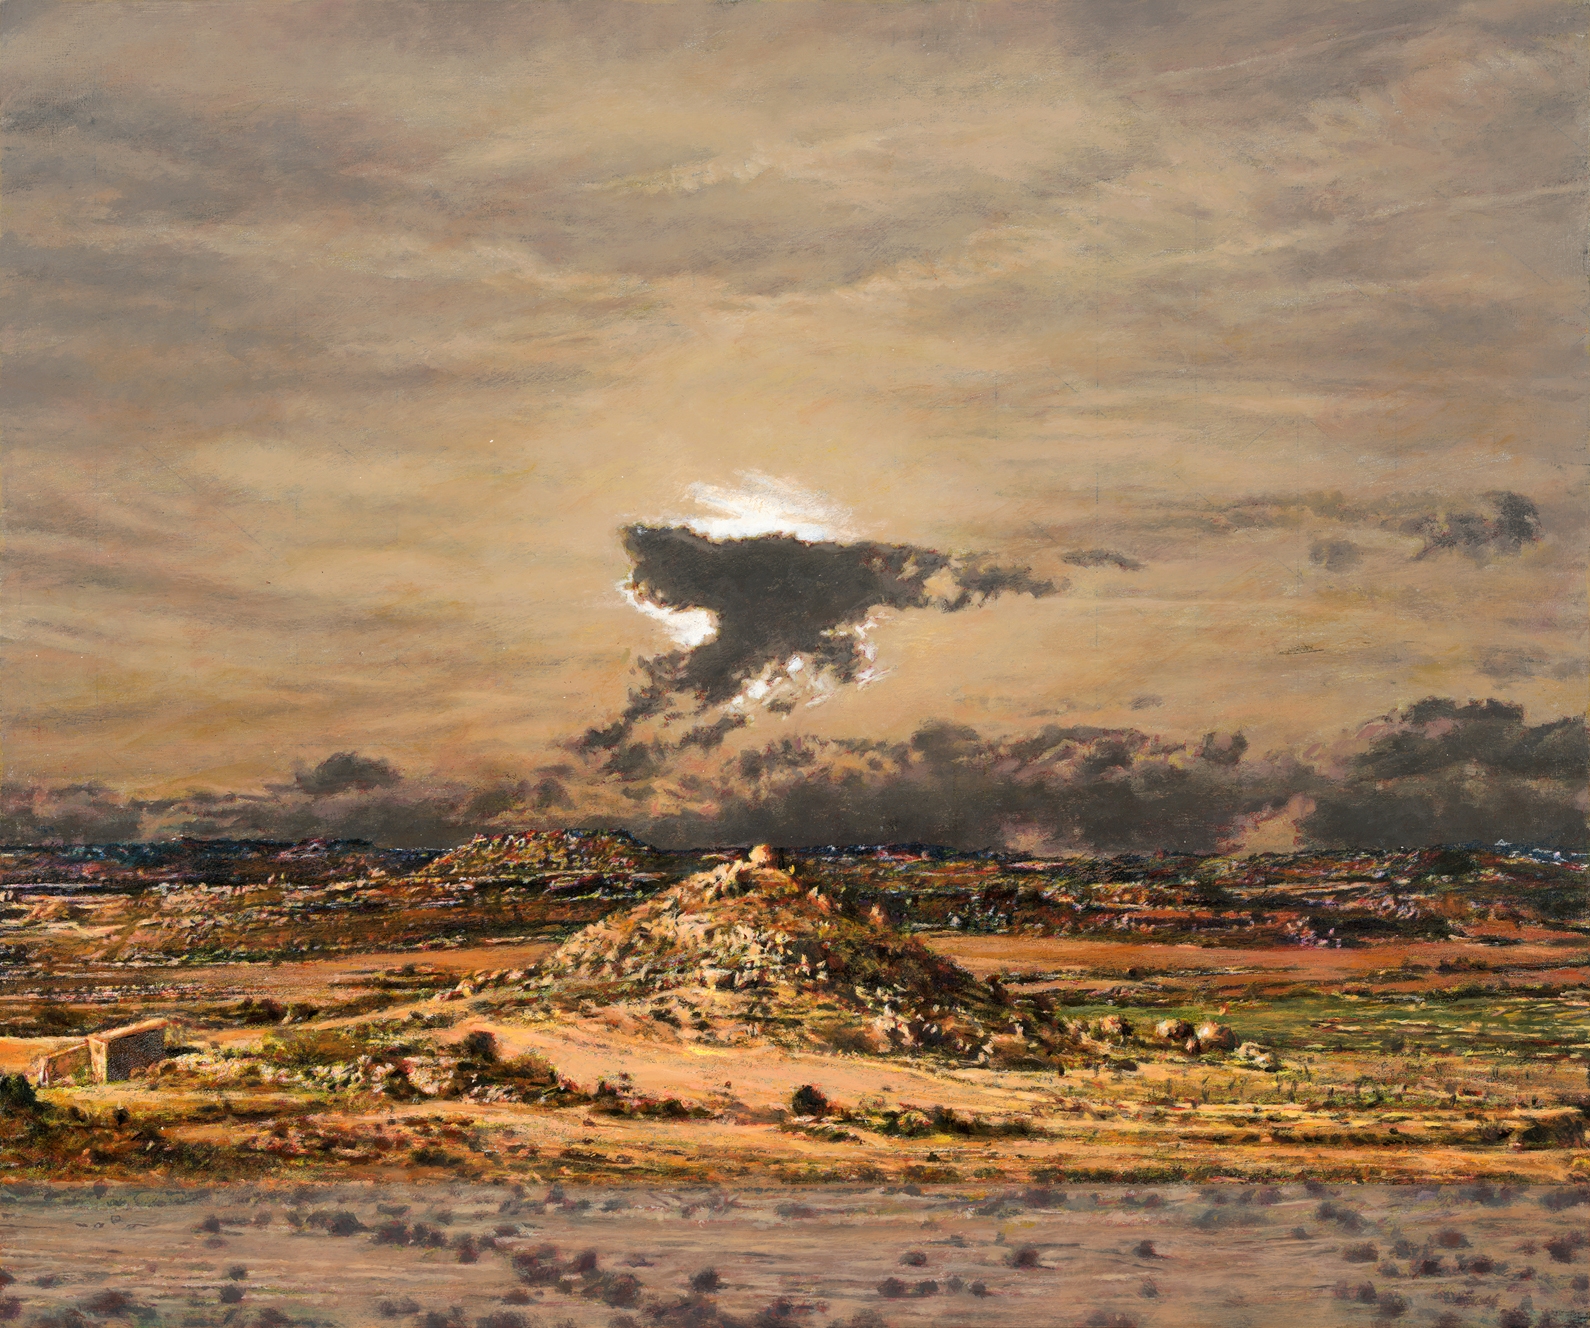 Heike Negenborn, Skyscape 7, 2013, Acrylic on canvas, 105 x 125 cm